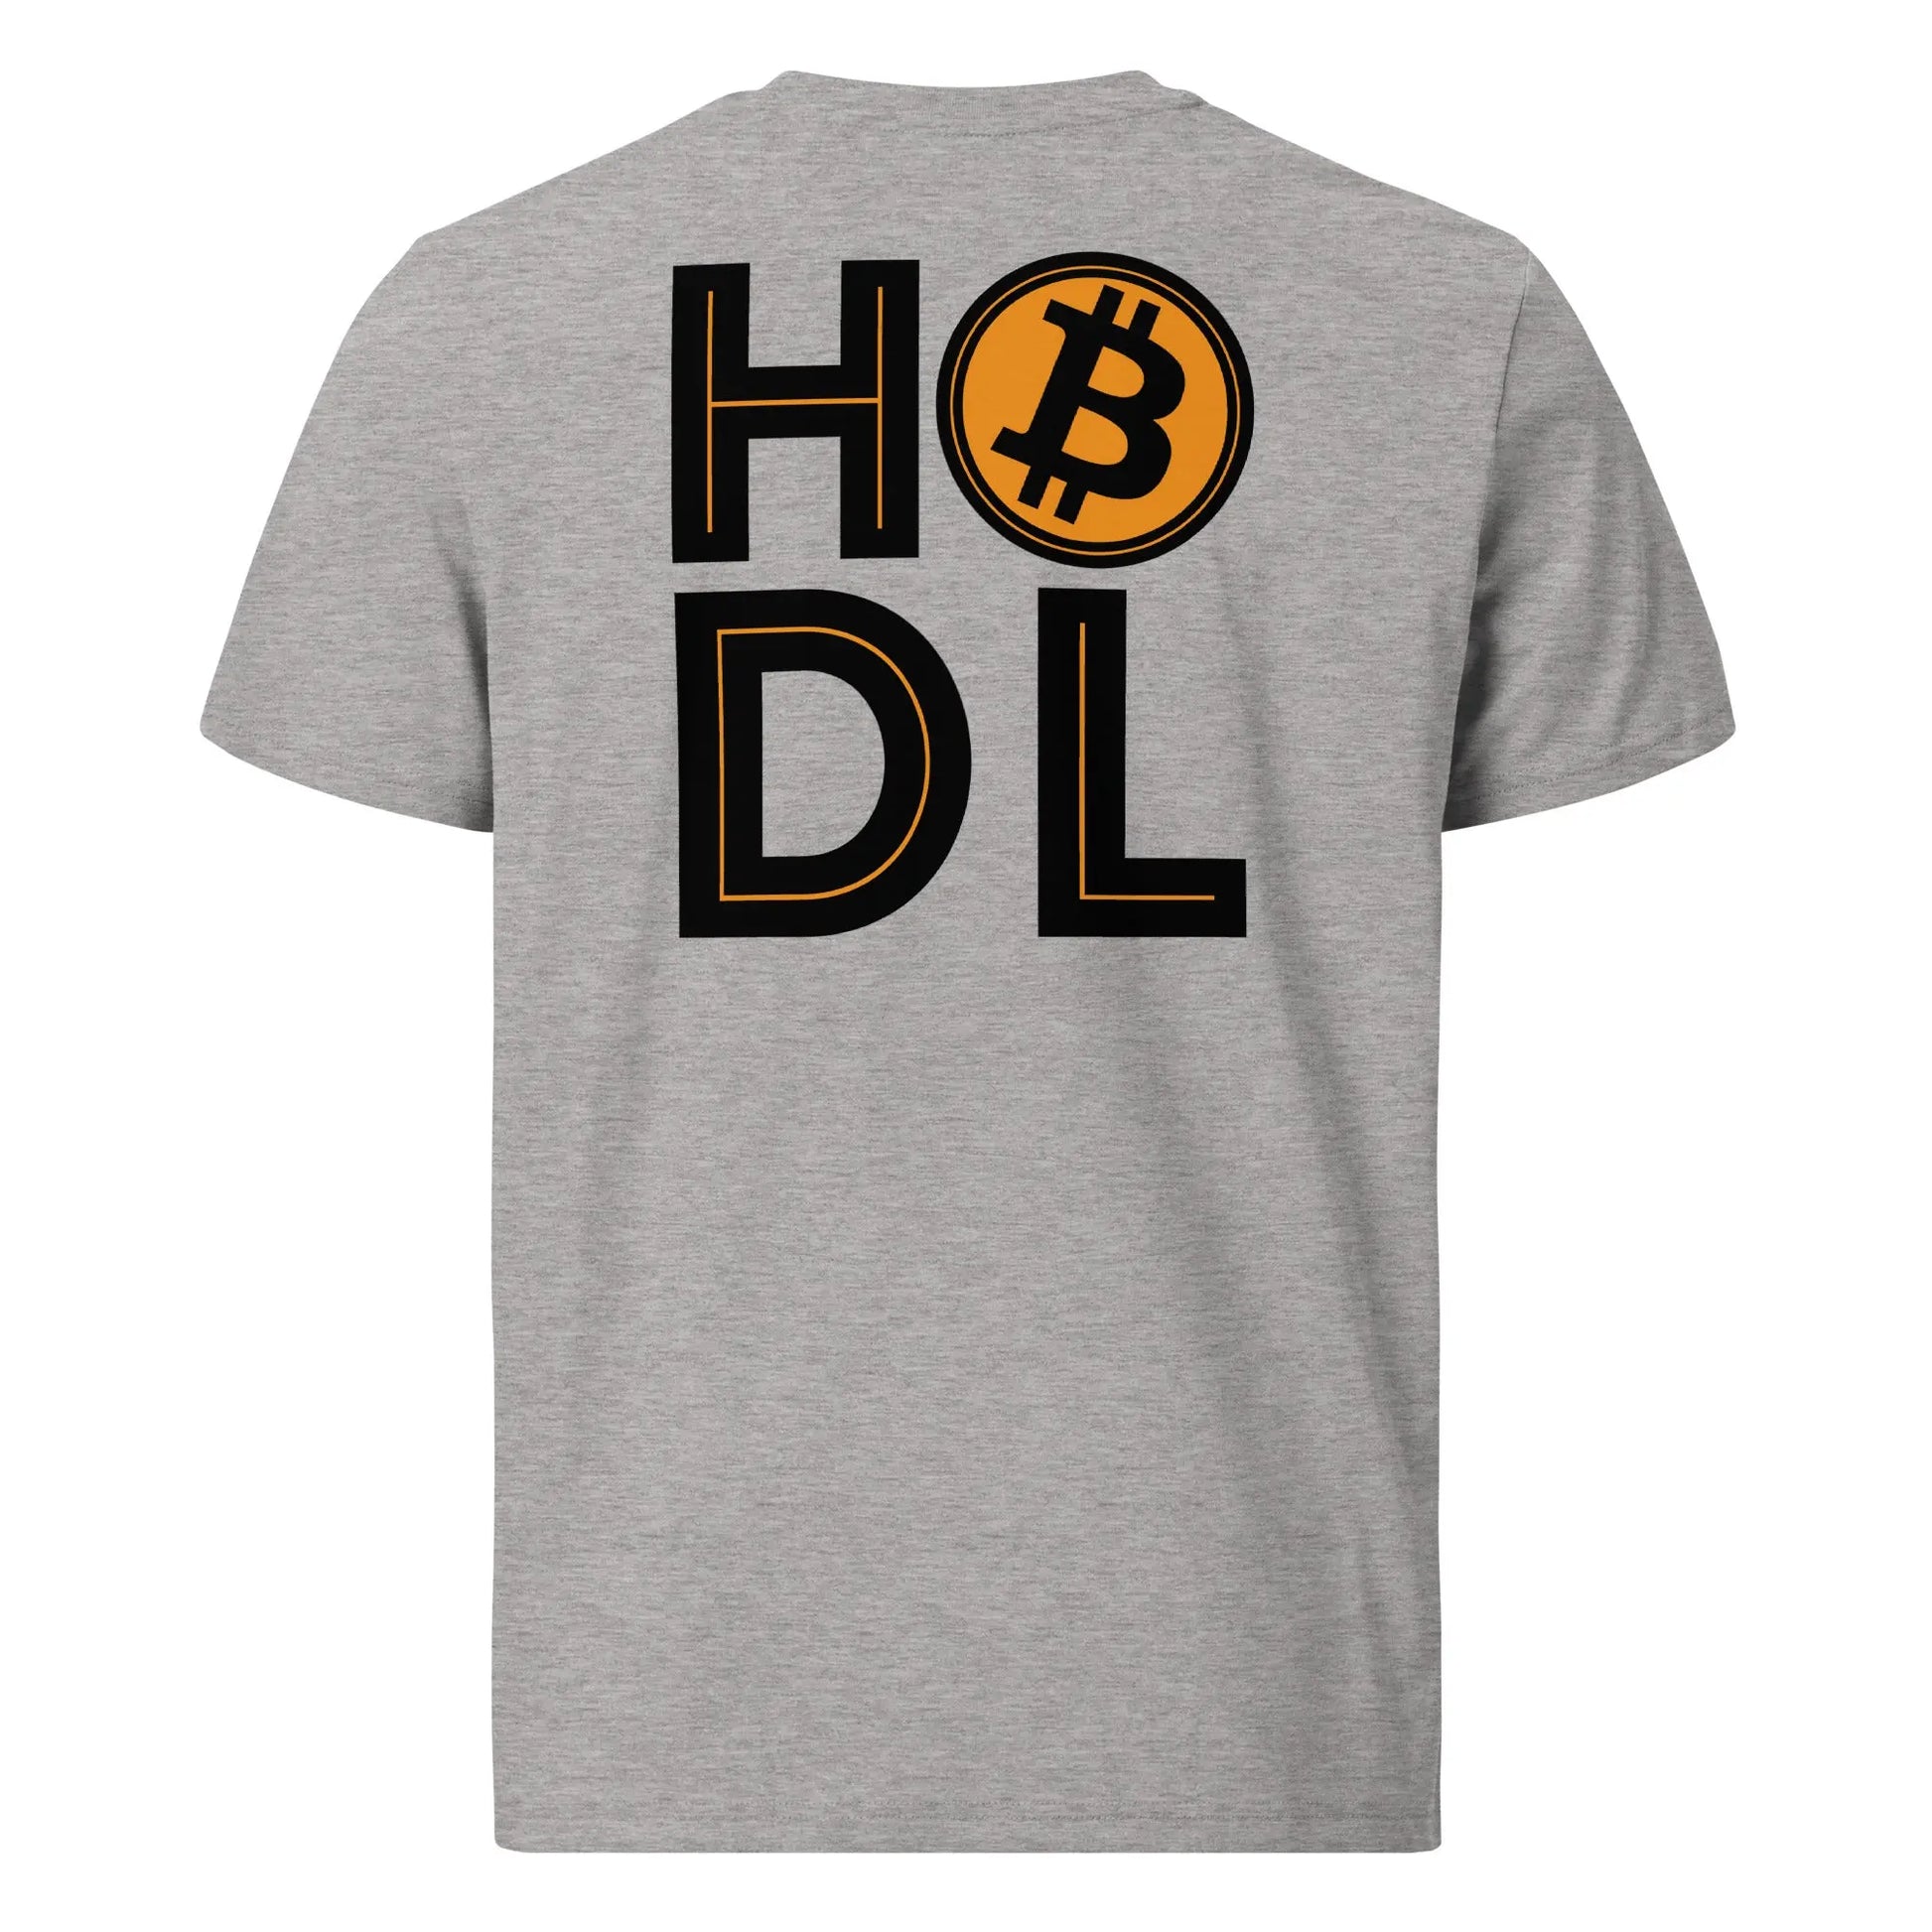 HODL - Premium Unisex Organic Cotton Bitcoin T-shirt Grey Color